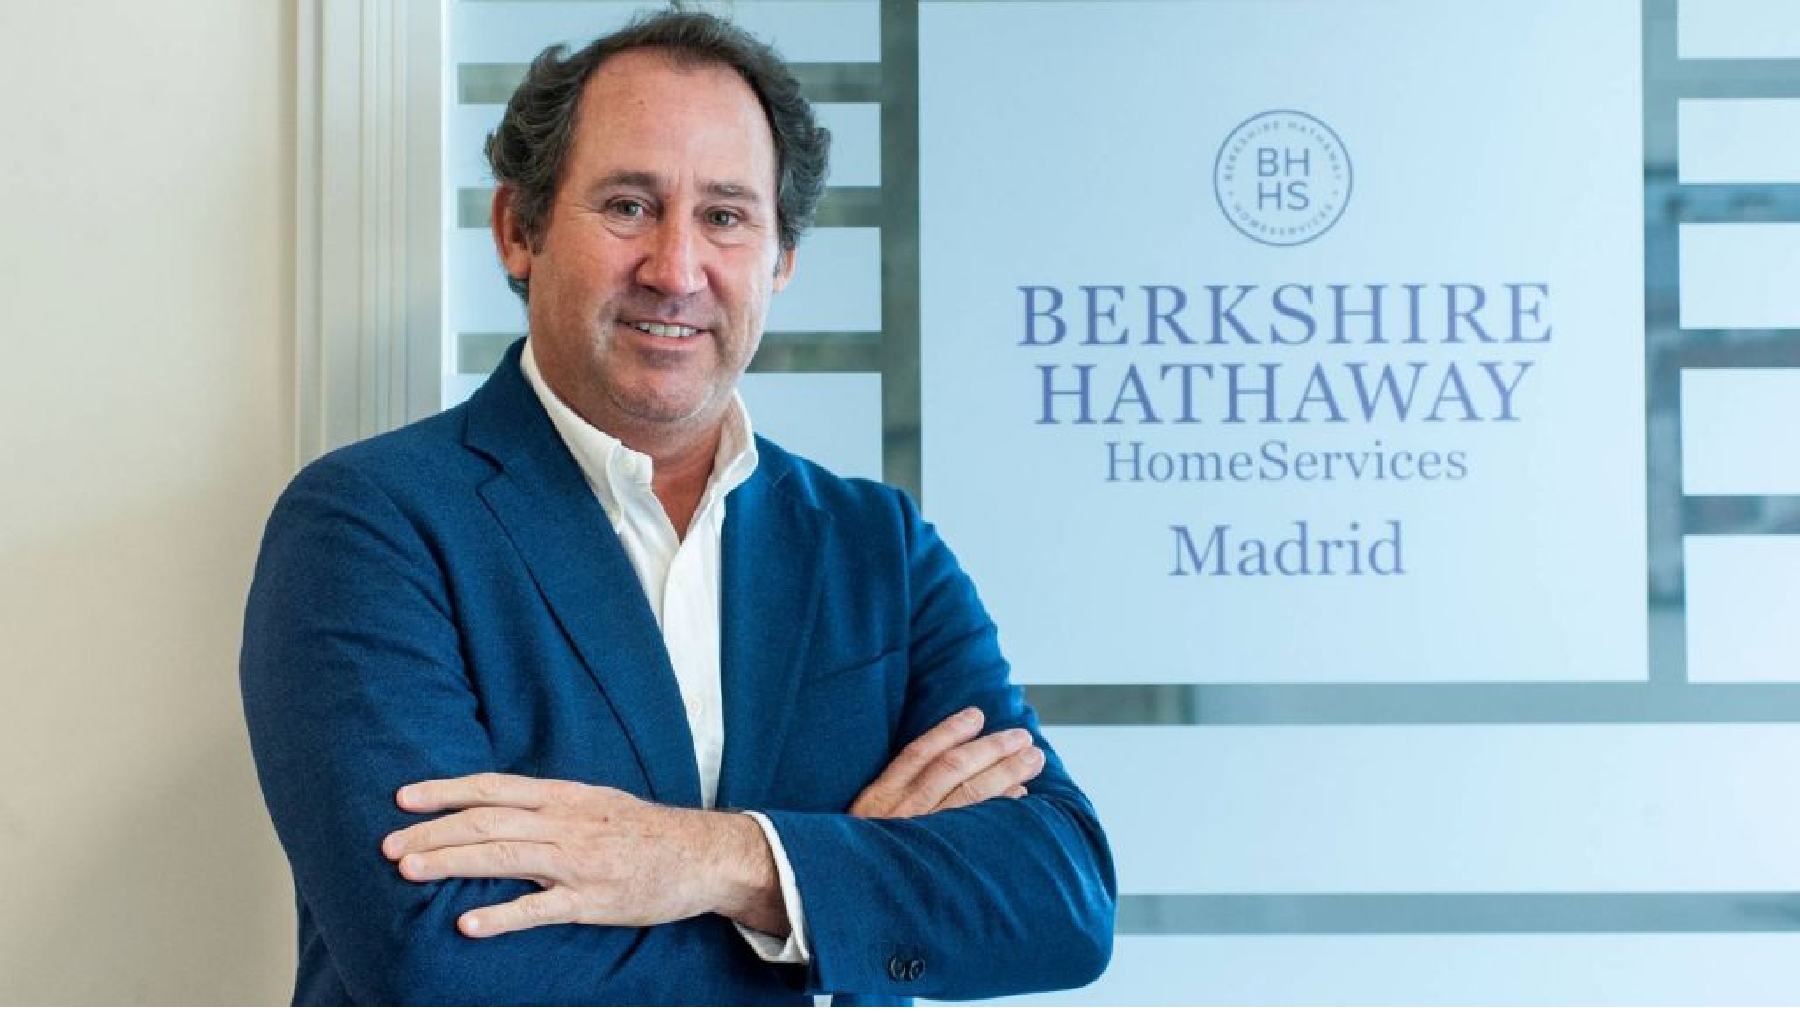 Bruno Rabassa, CEO de Berkshire Hathaway HomeServices.